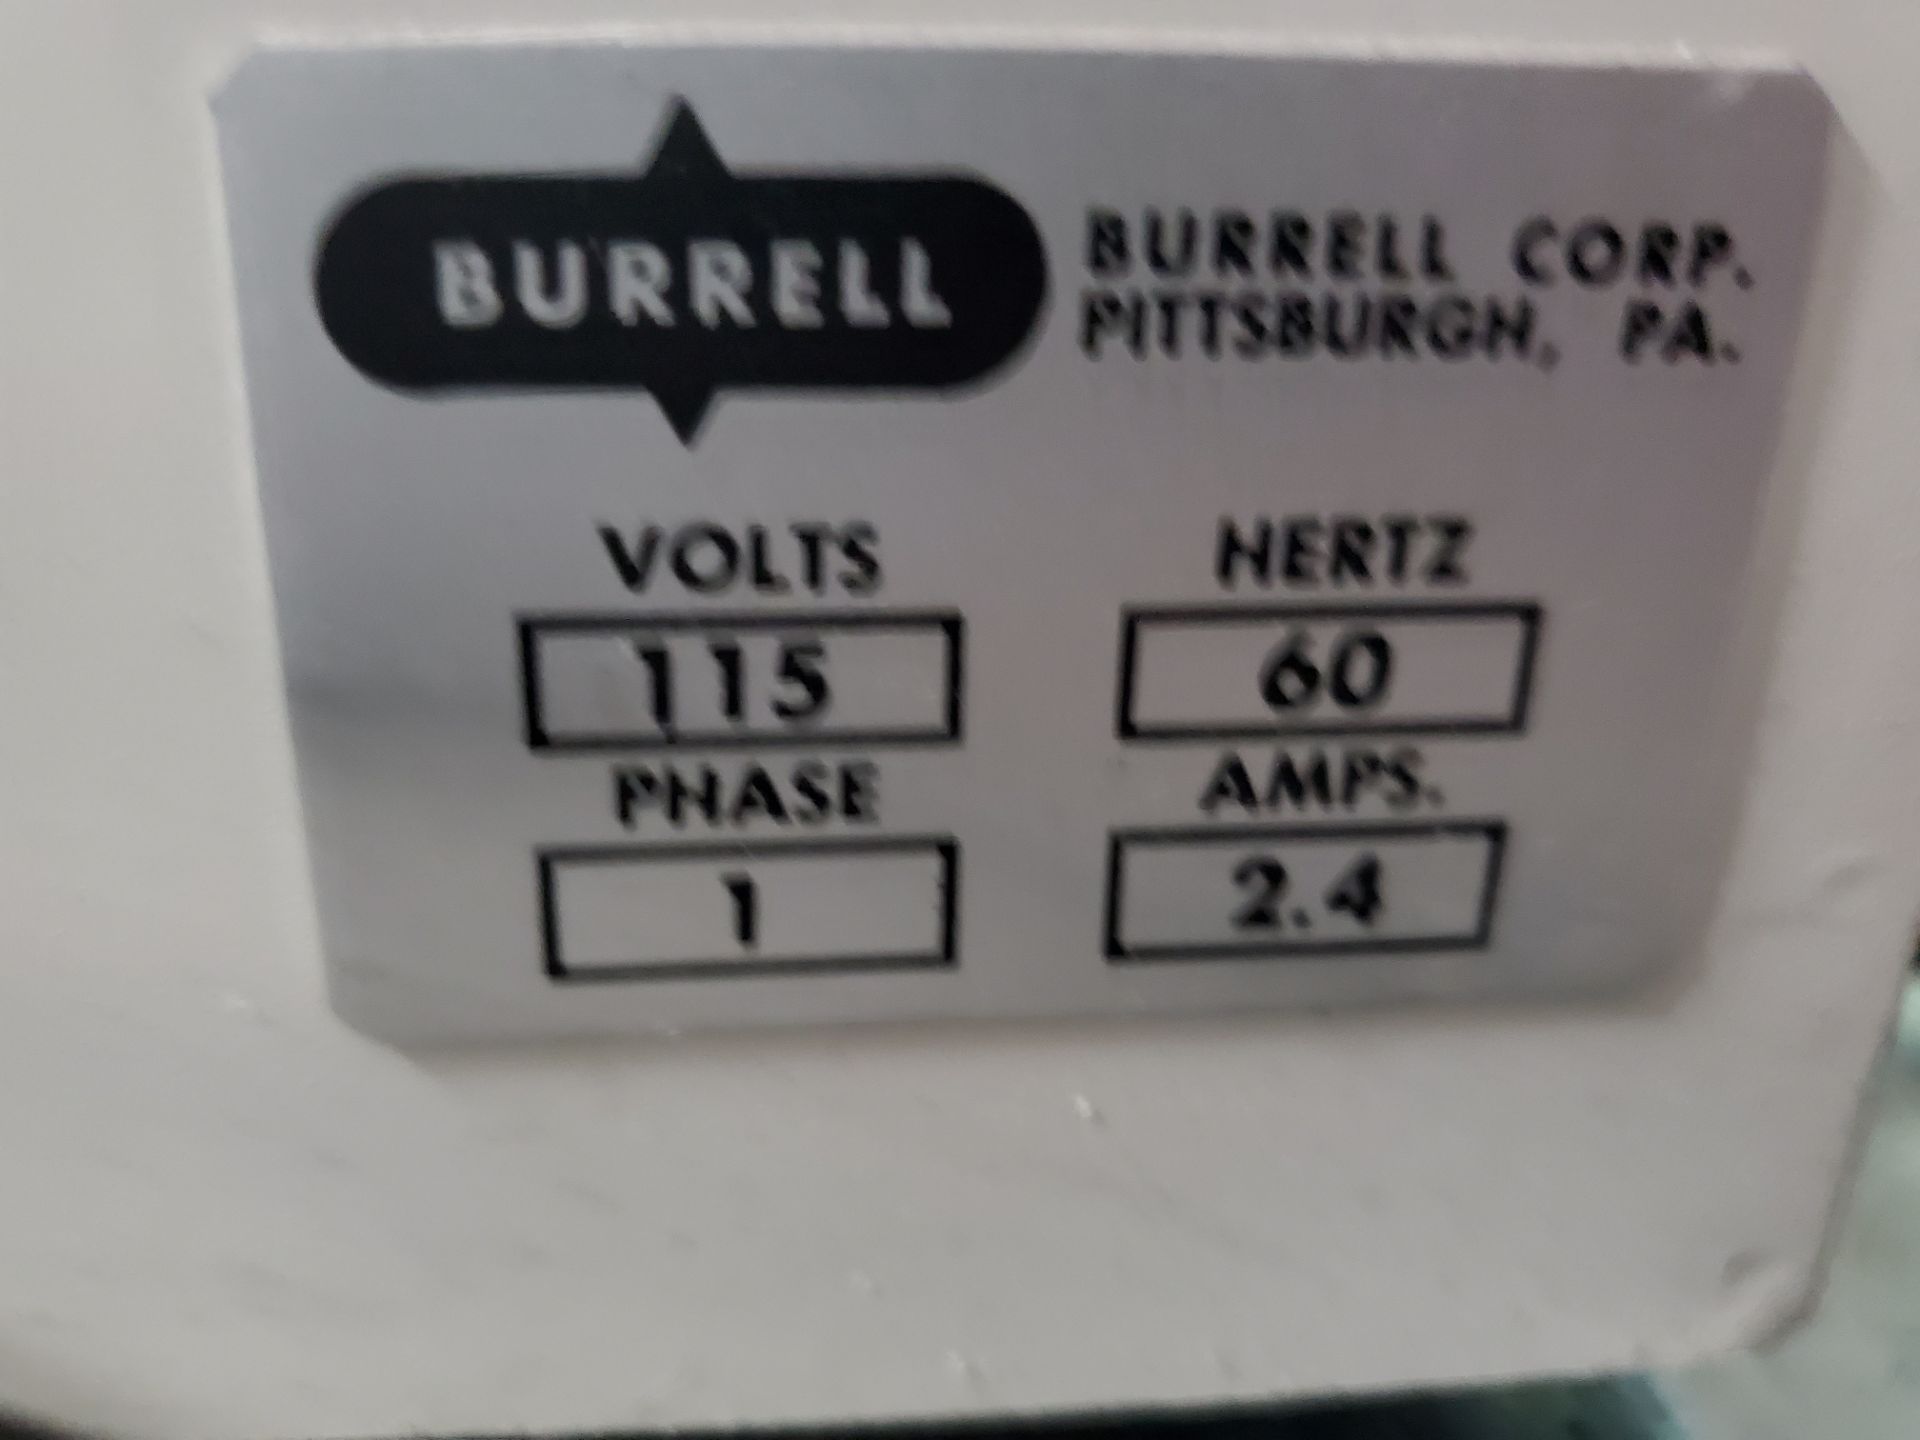 Burrell Wrist Action Shaker, model 75, 115 volts. - Image 2 of 4